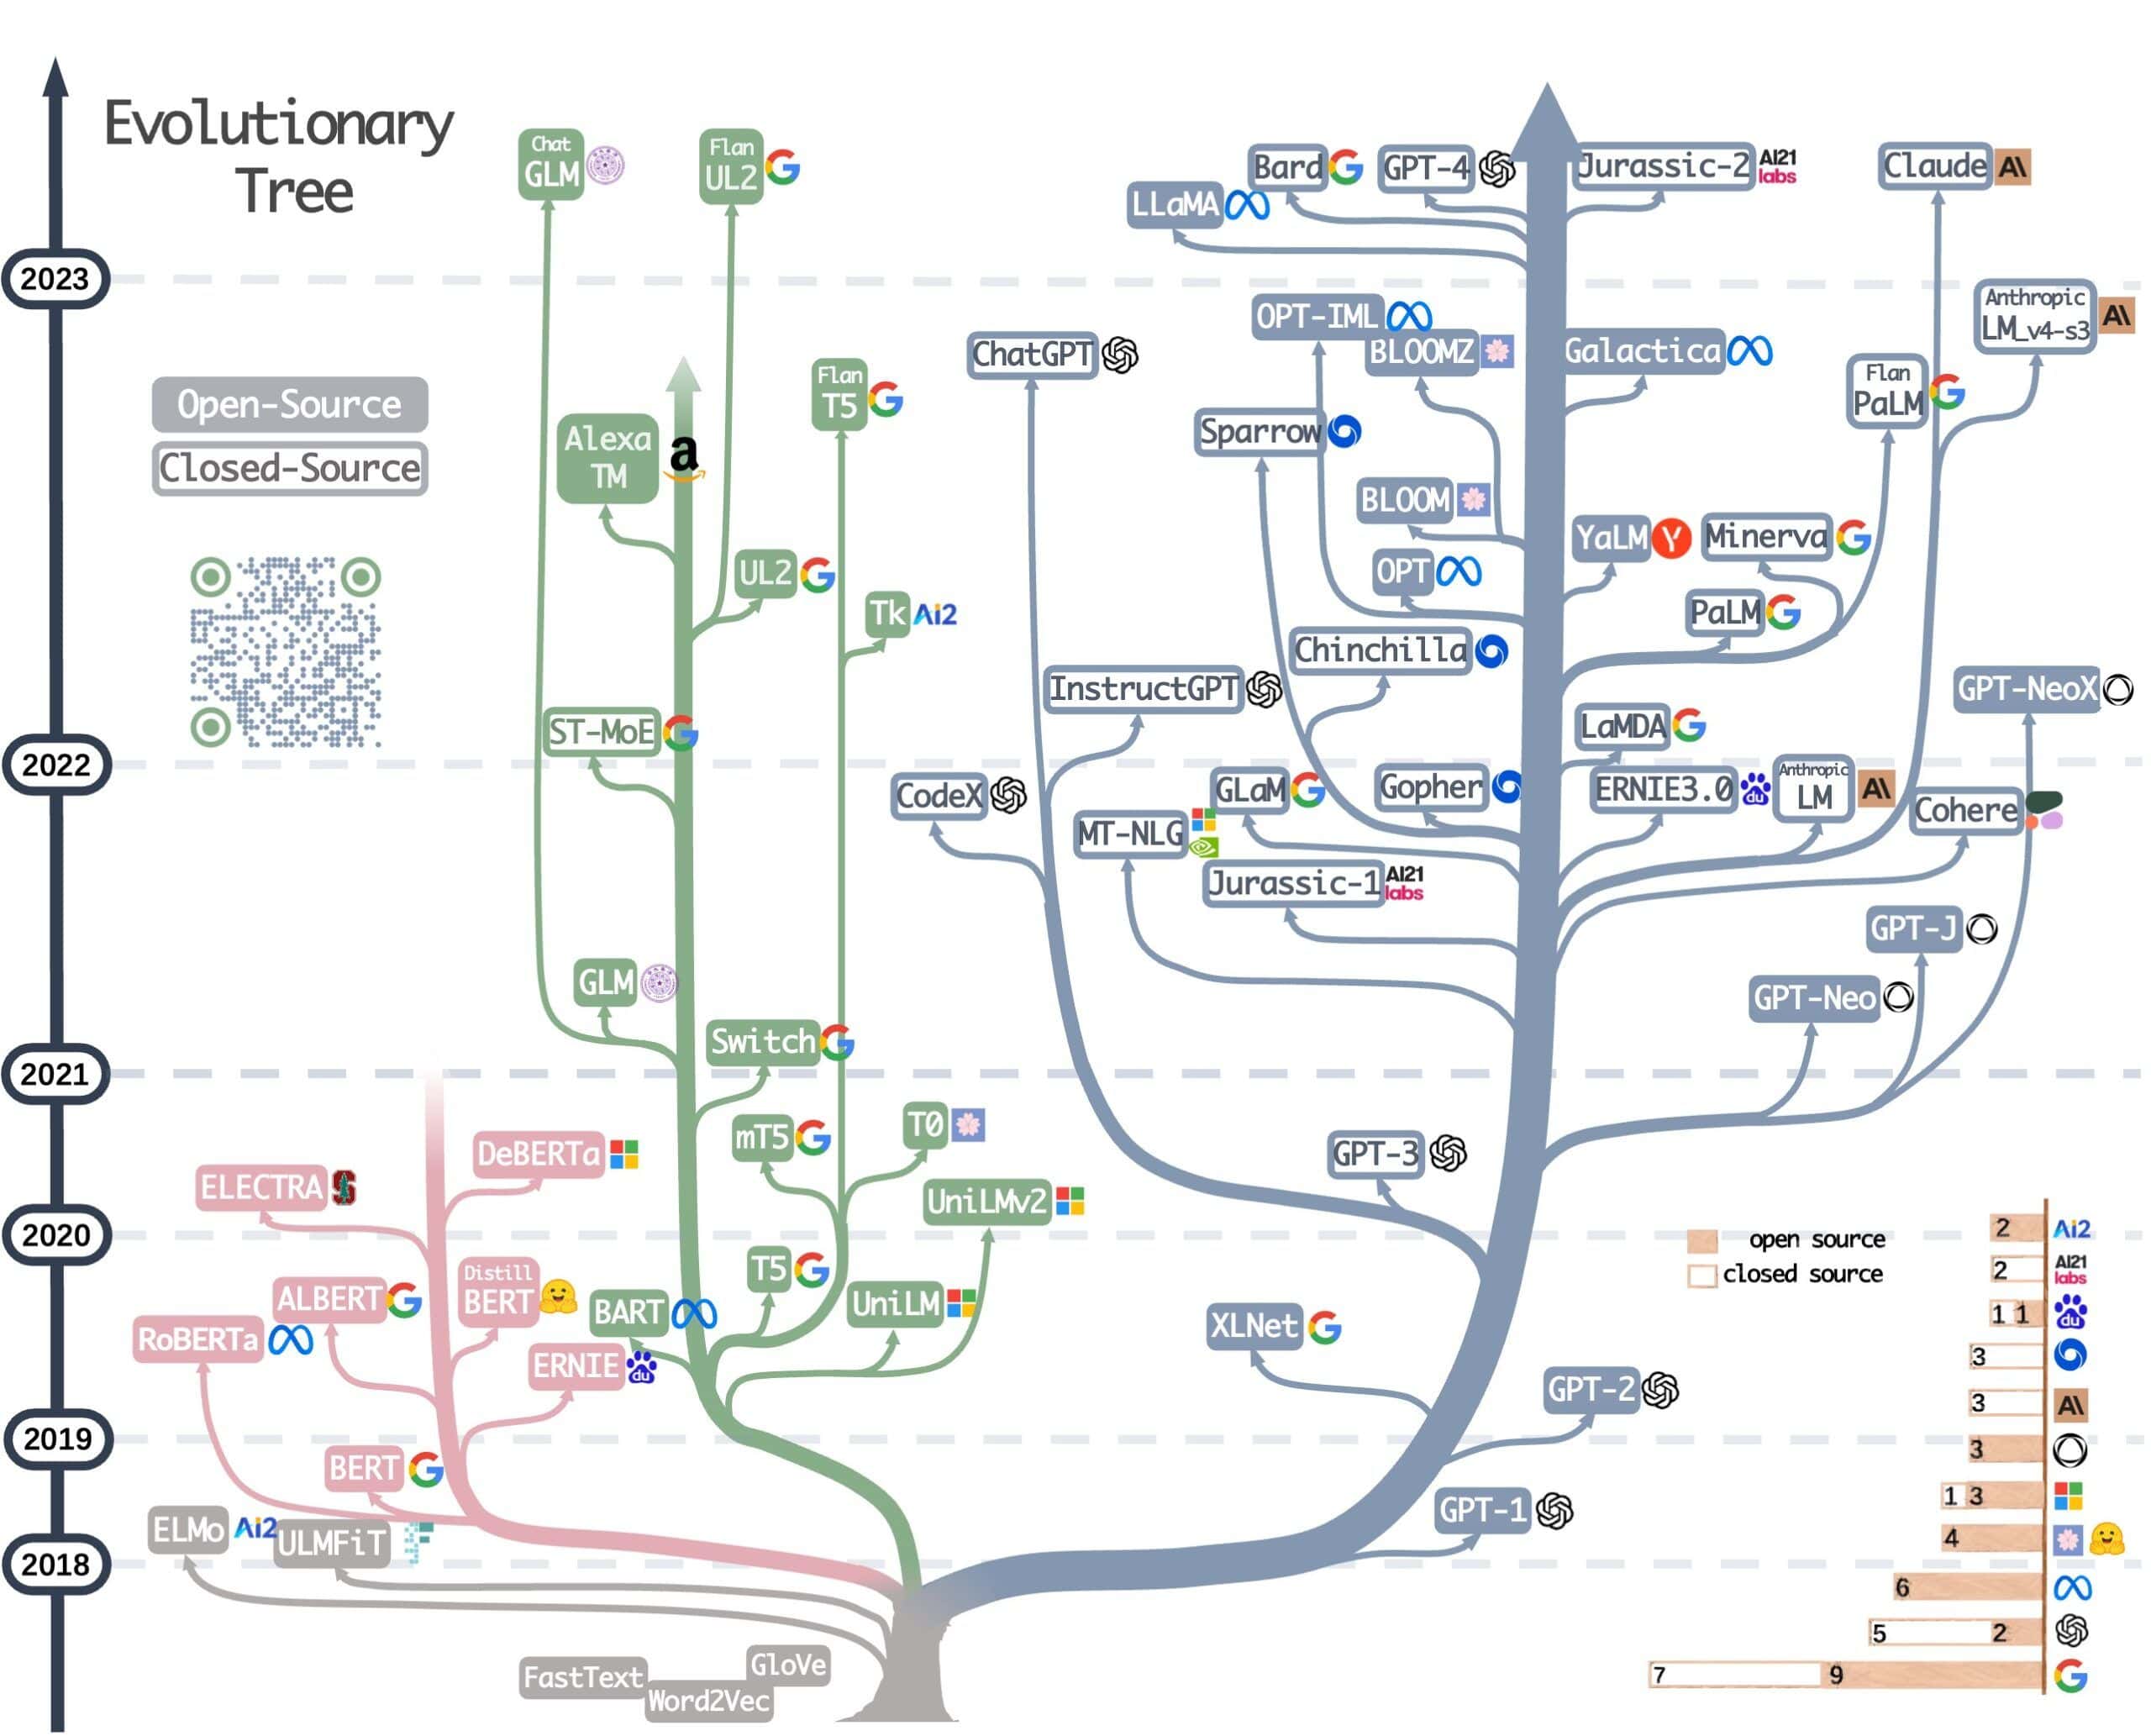 Large language models - evolutionary tree